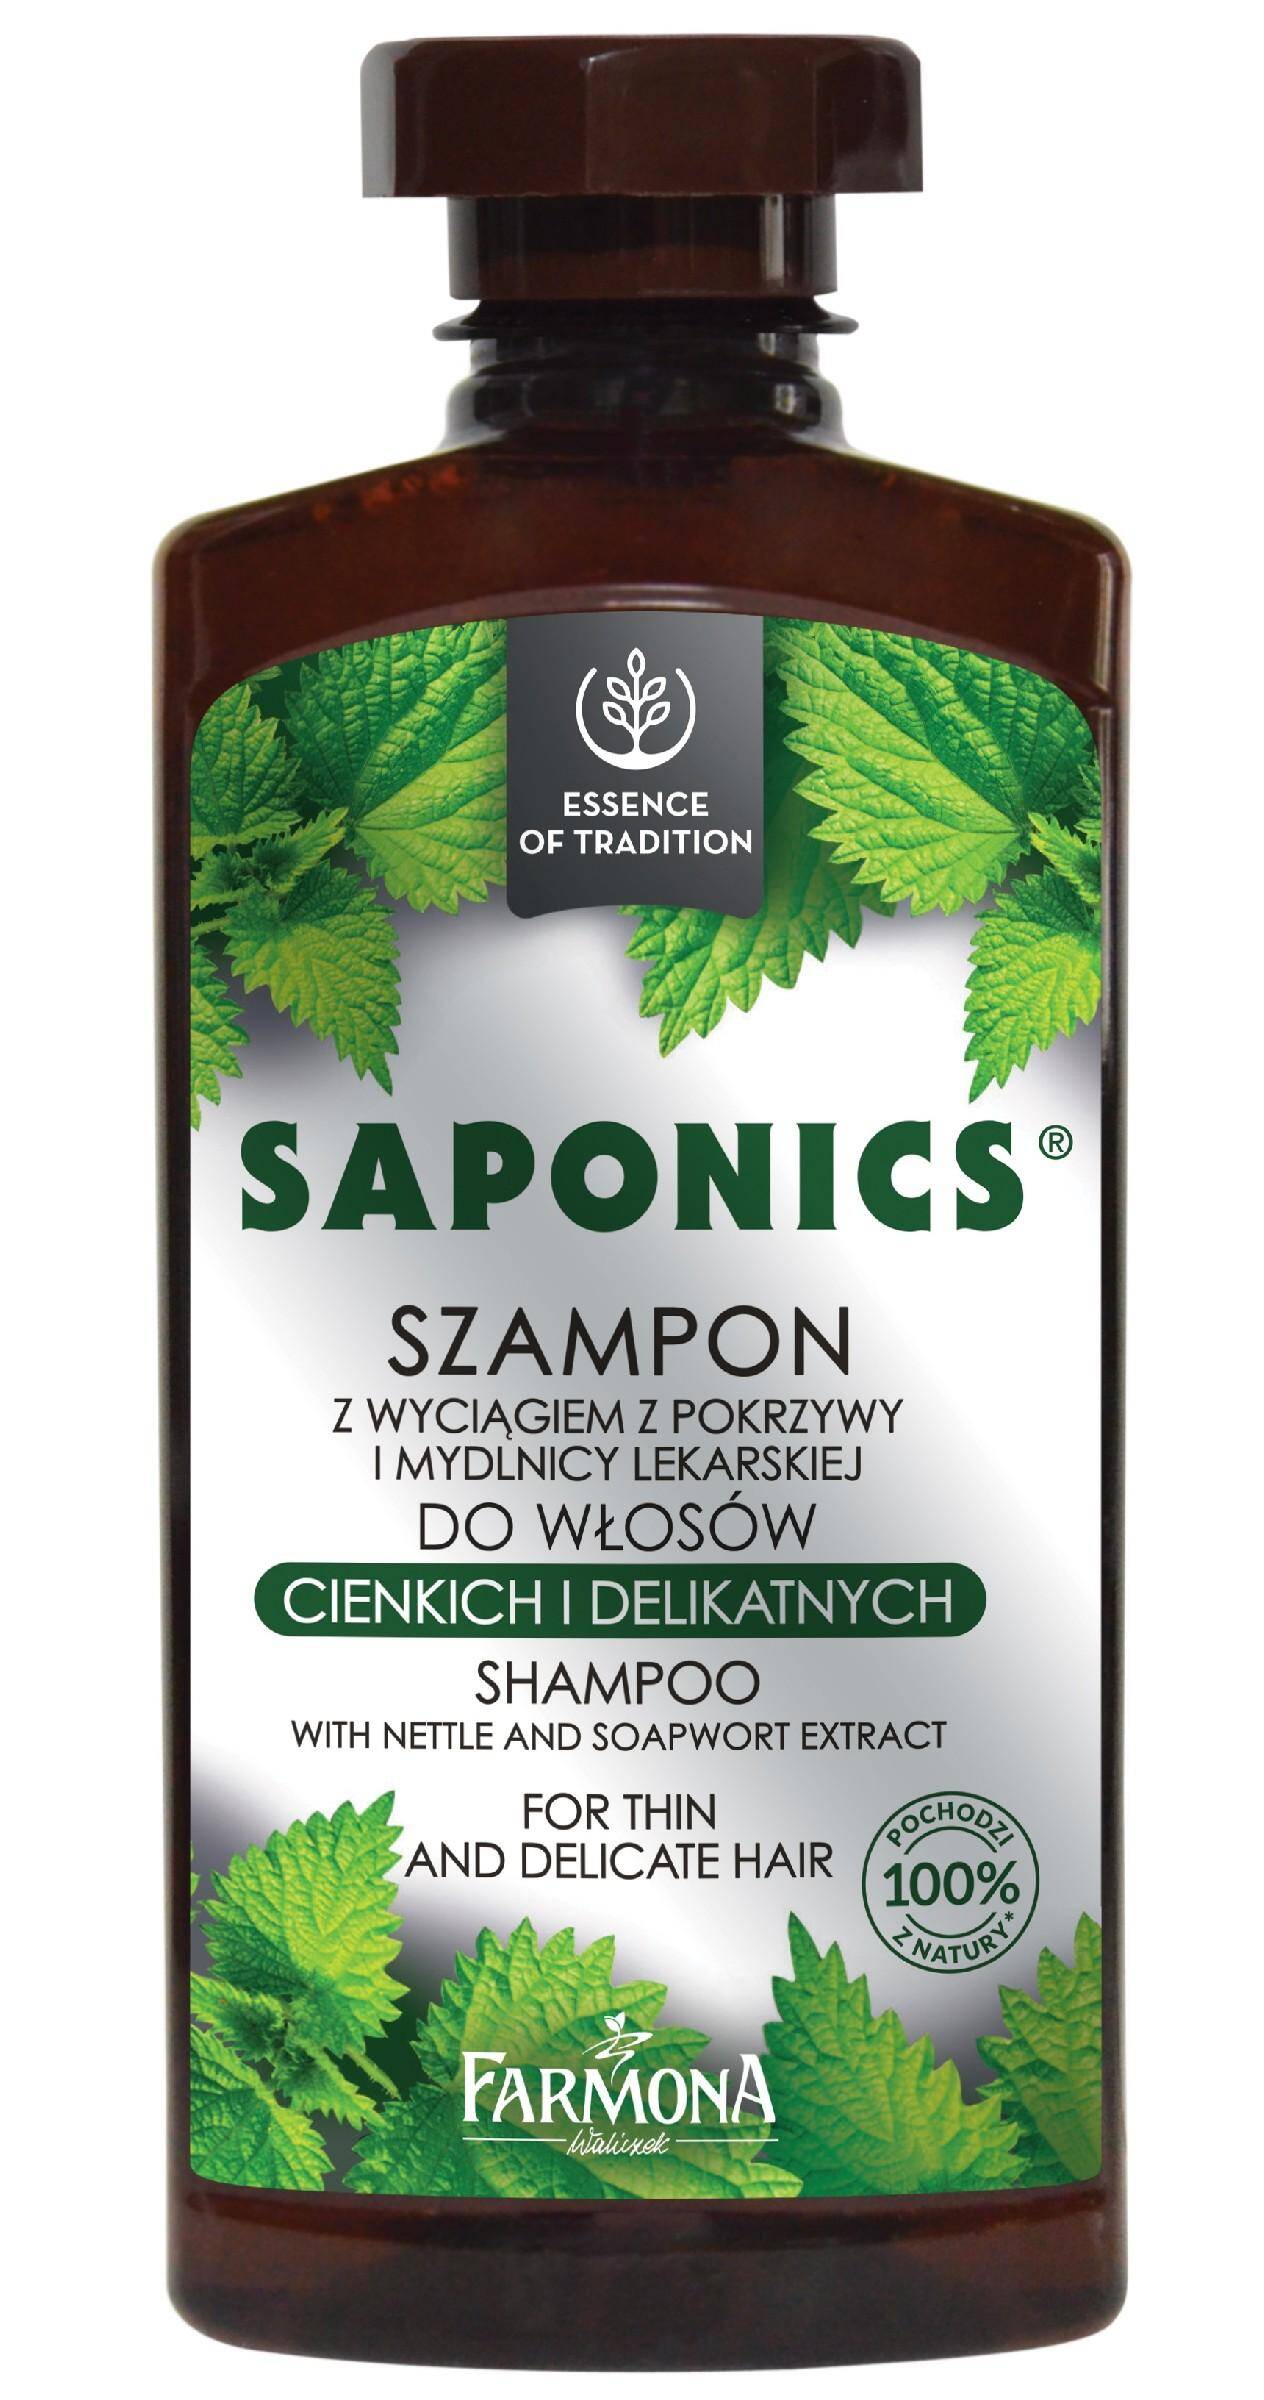 Farmona Saponics szampon